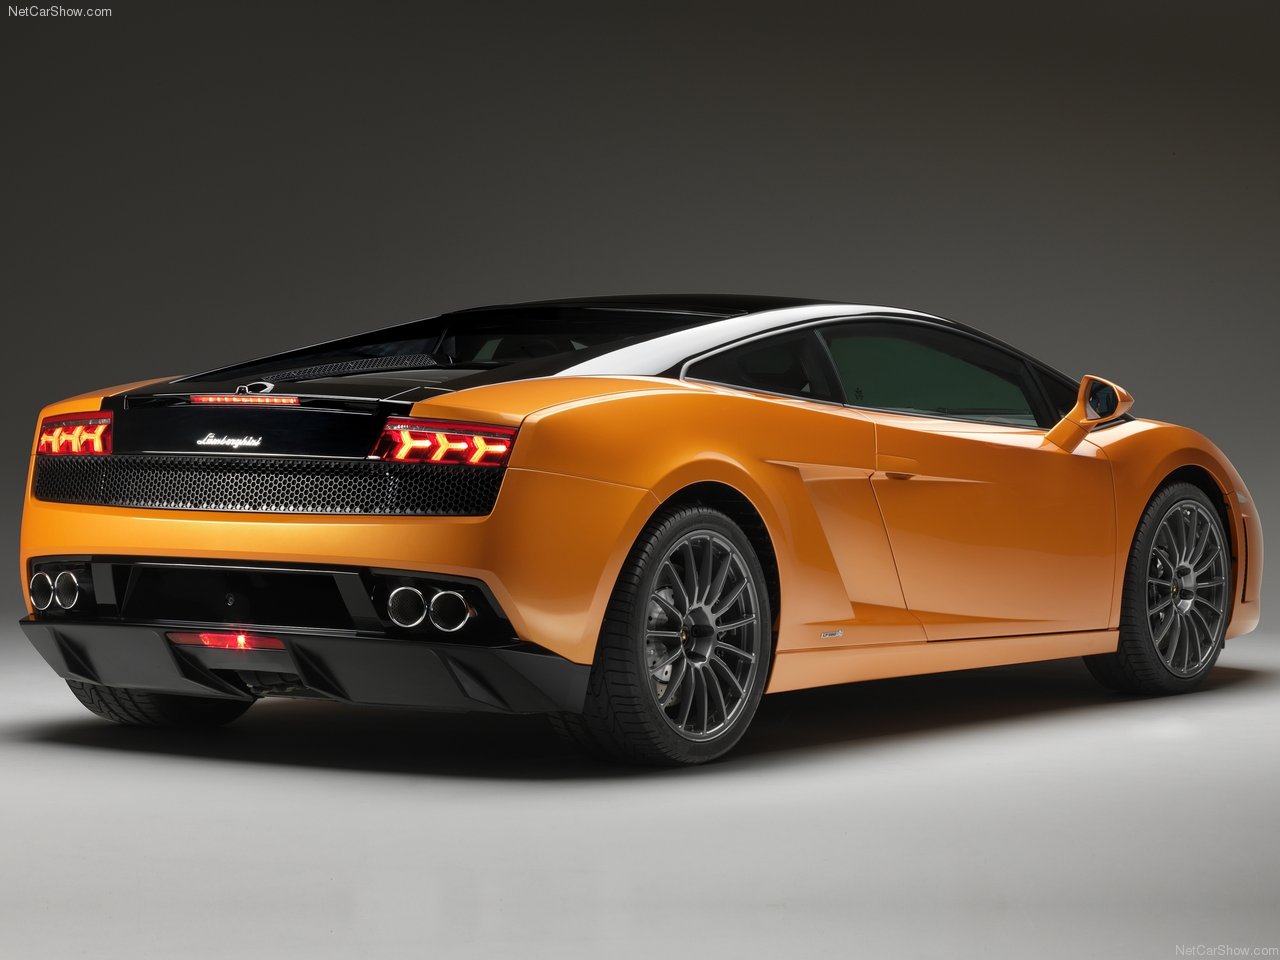 Lamborghini - Populaire francais d'automobiles: 2011 Lamborghini ...